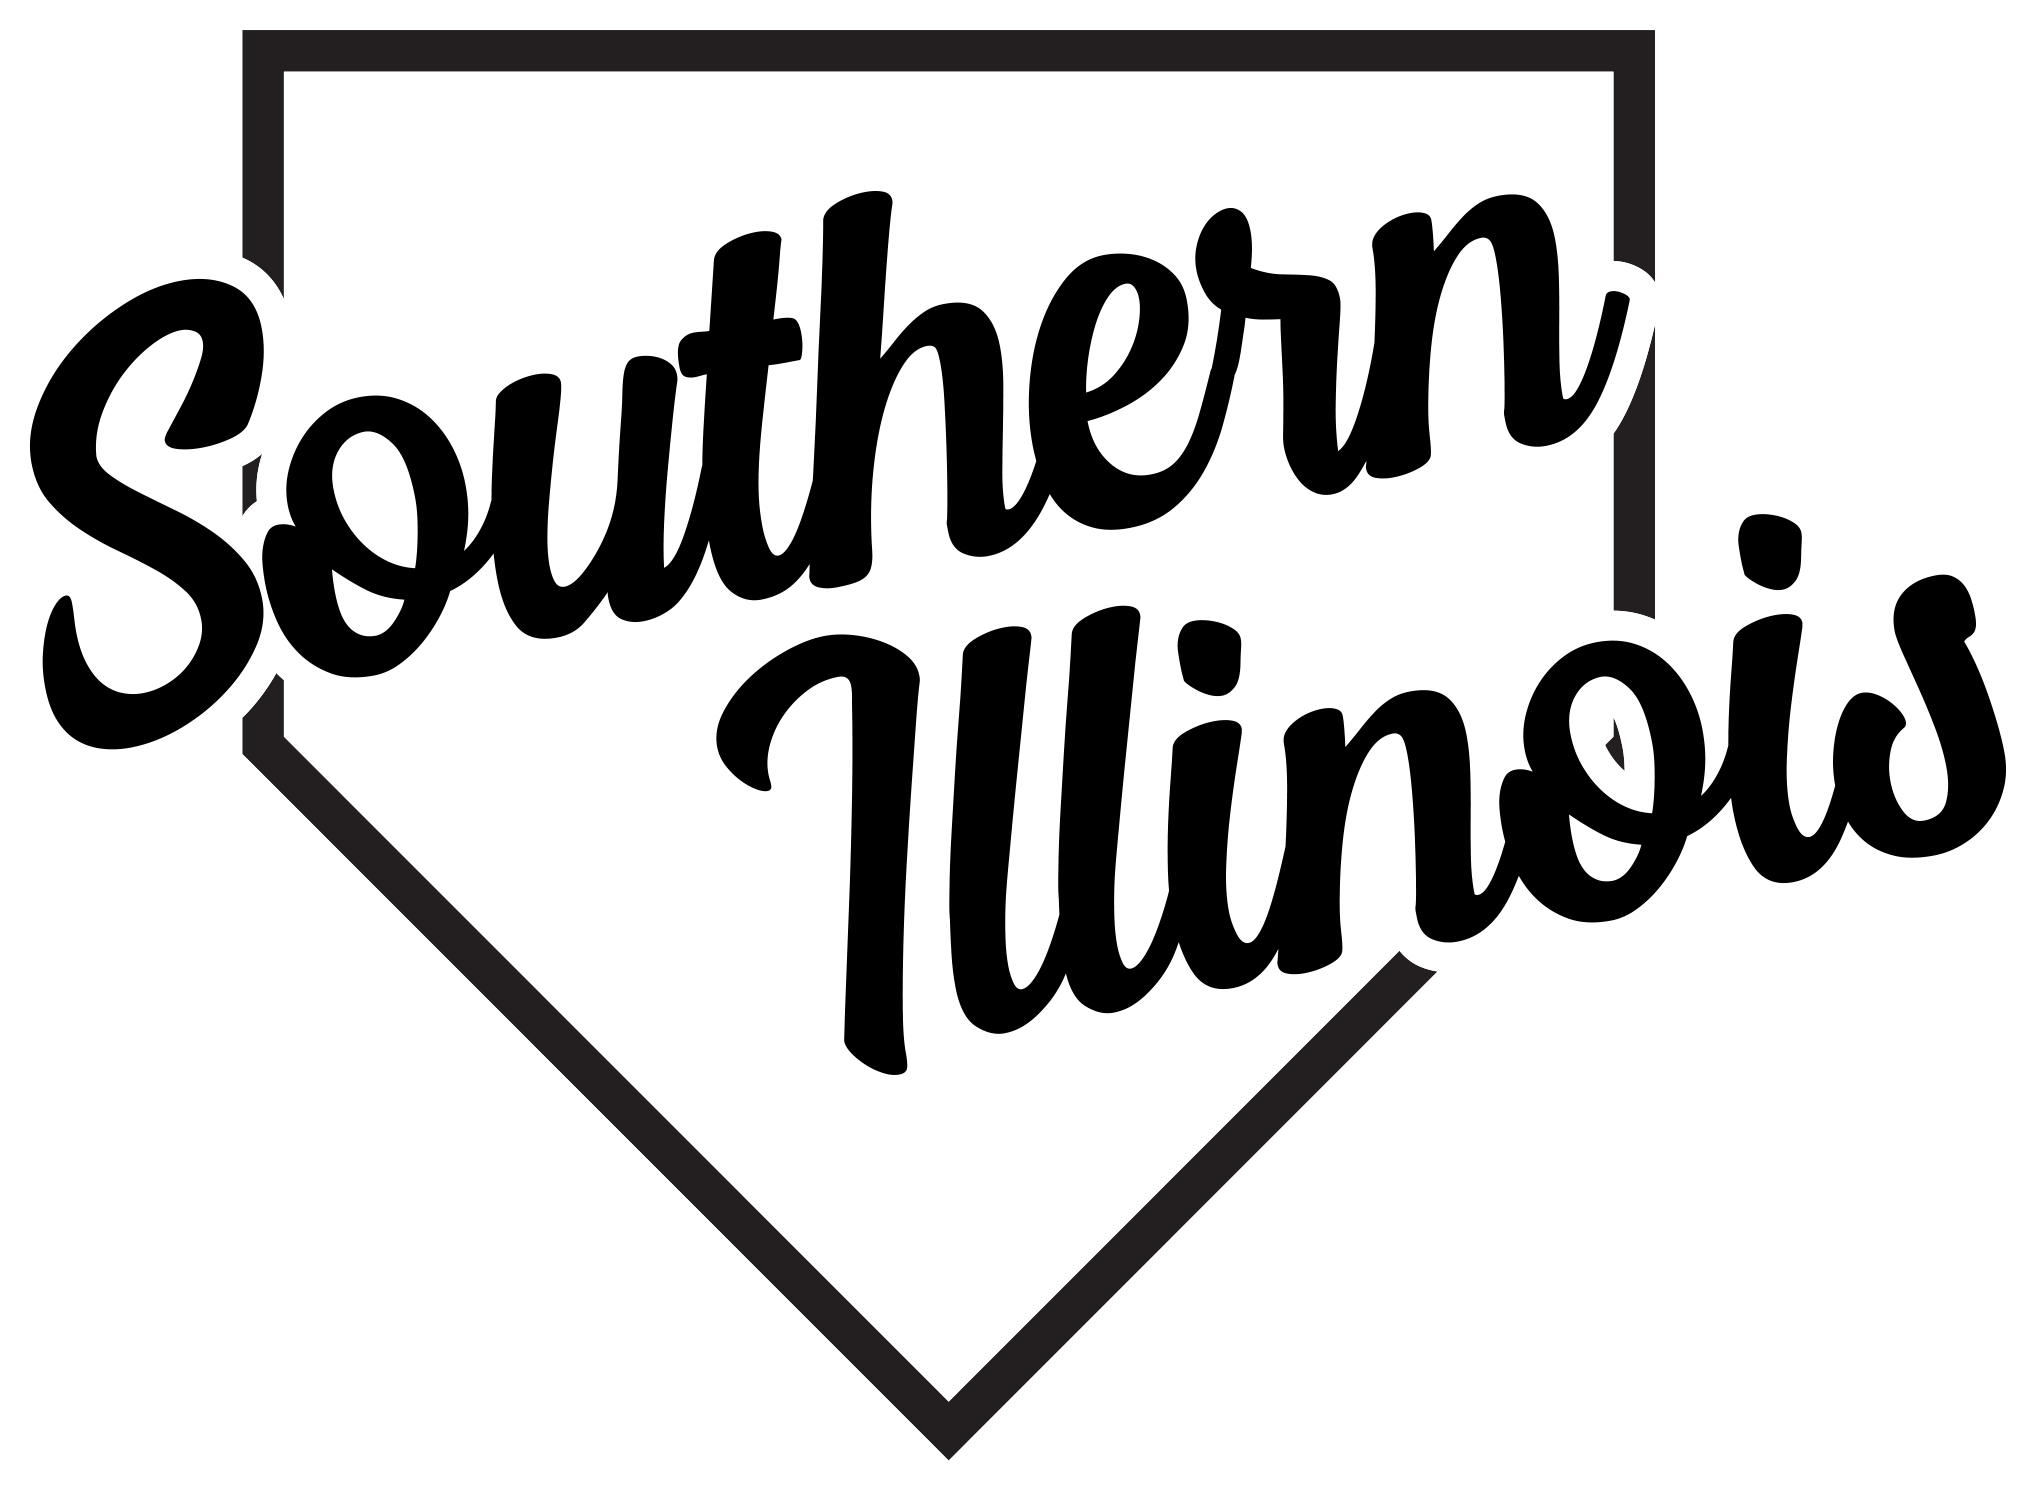 Southern Illinois